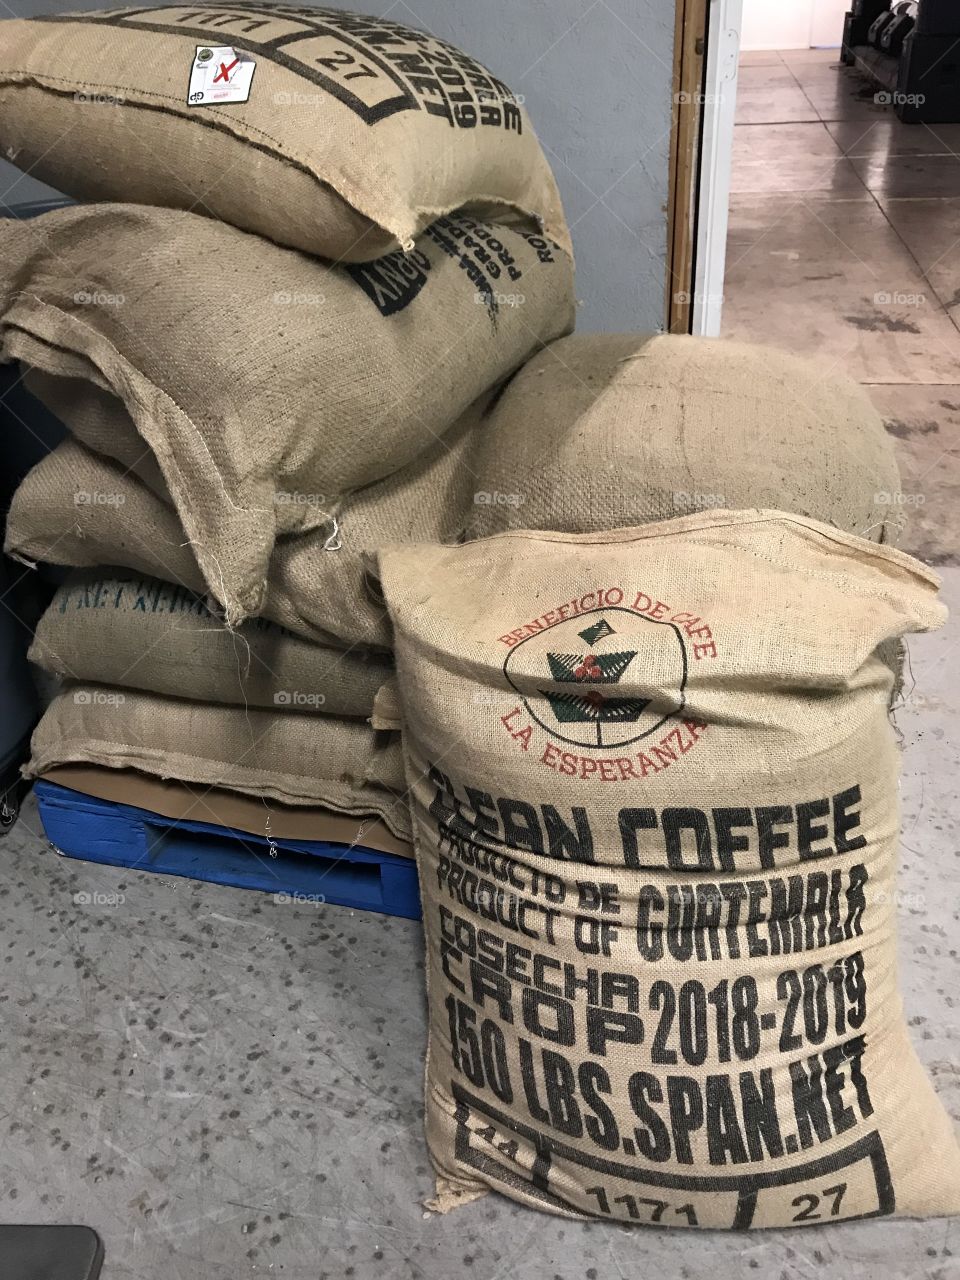 Coffee in sacks 